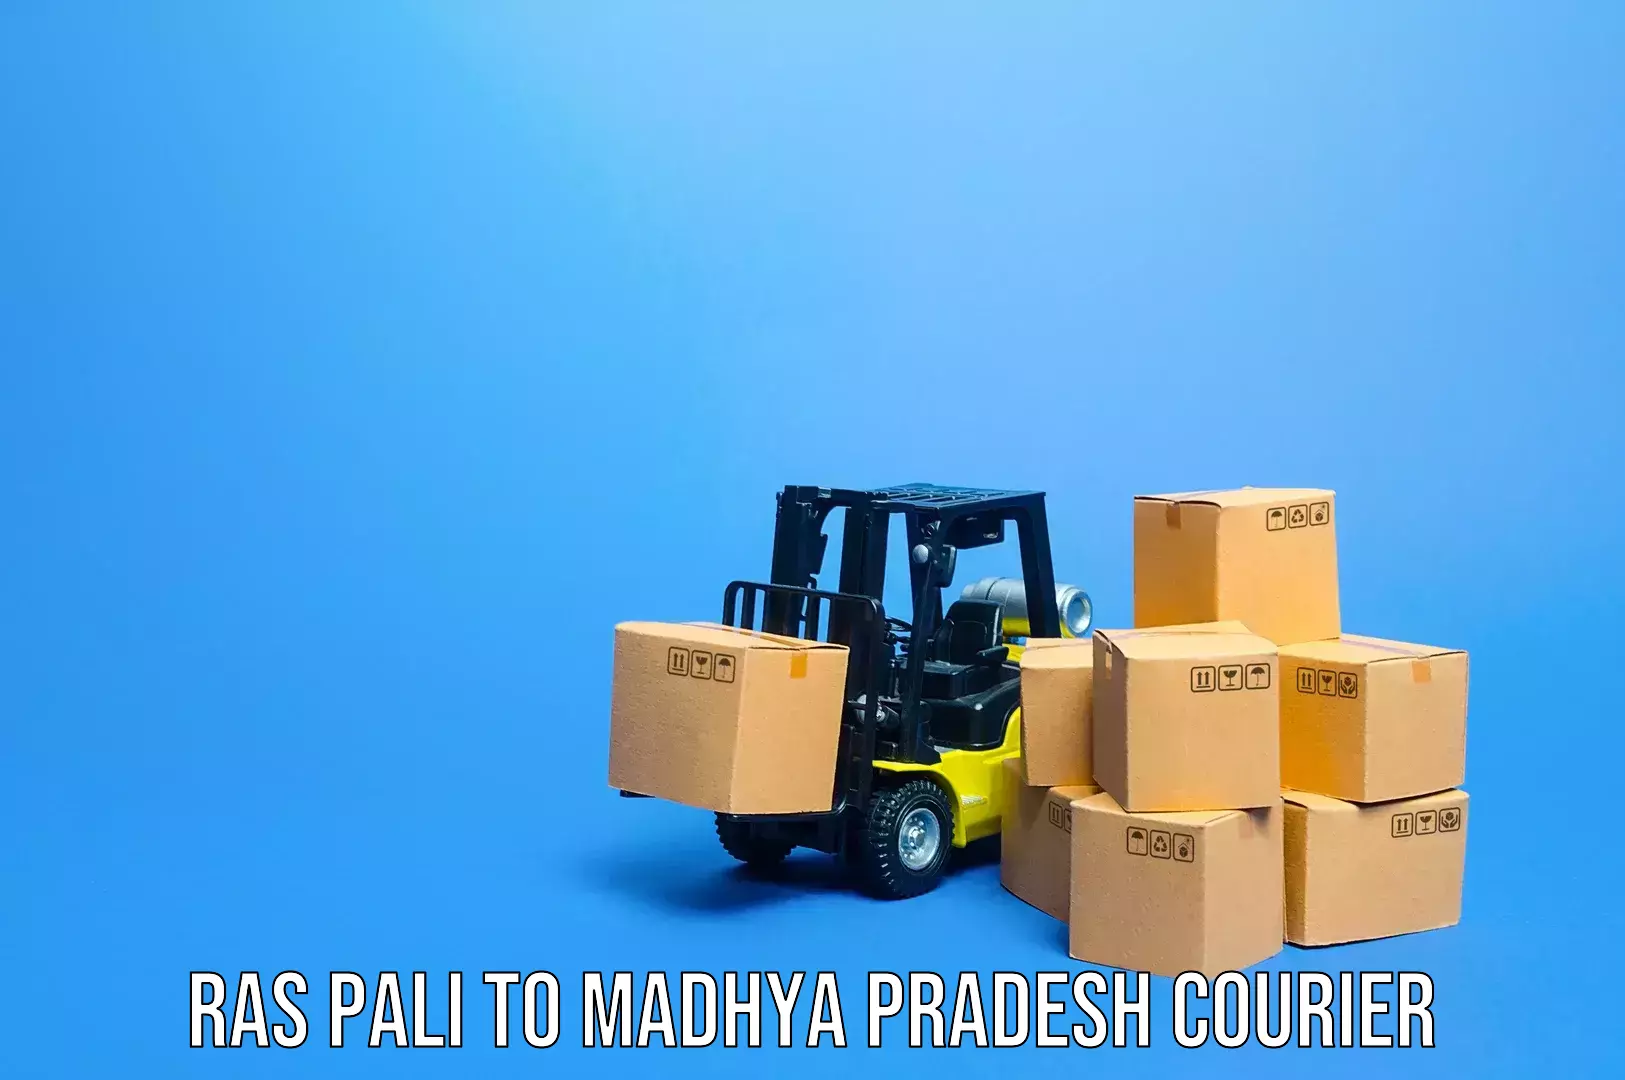 Luggage shipping specialists Ras Pali to Madhya Pradesh